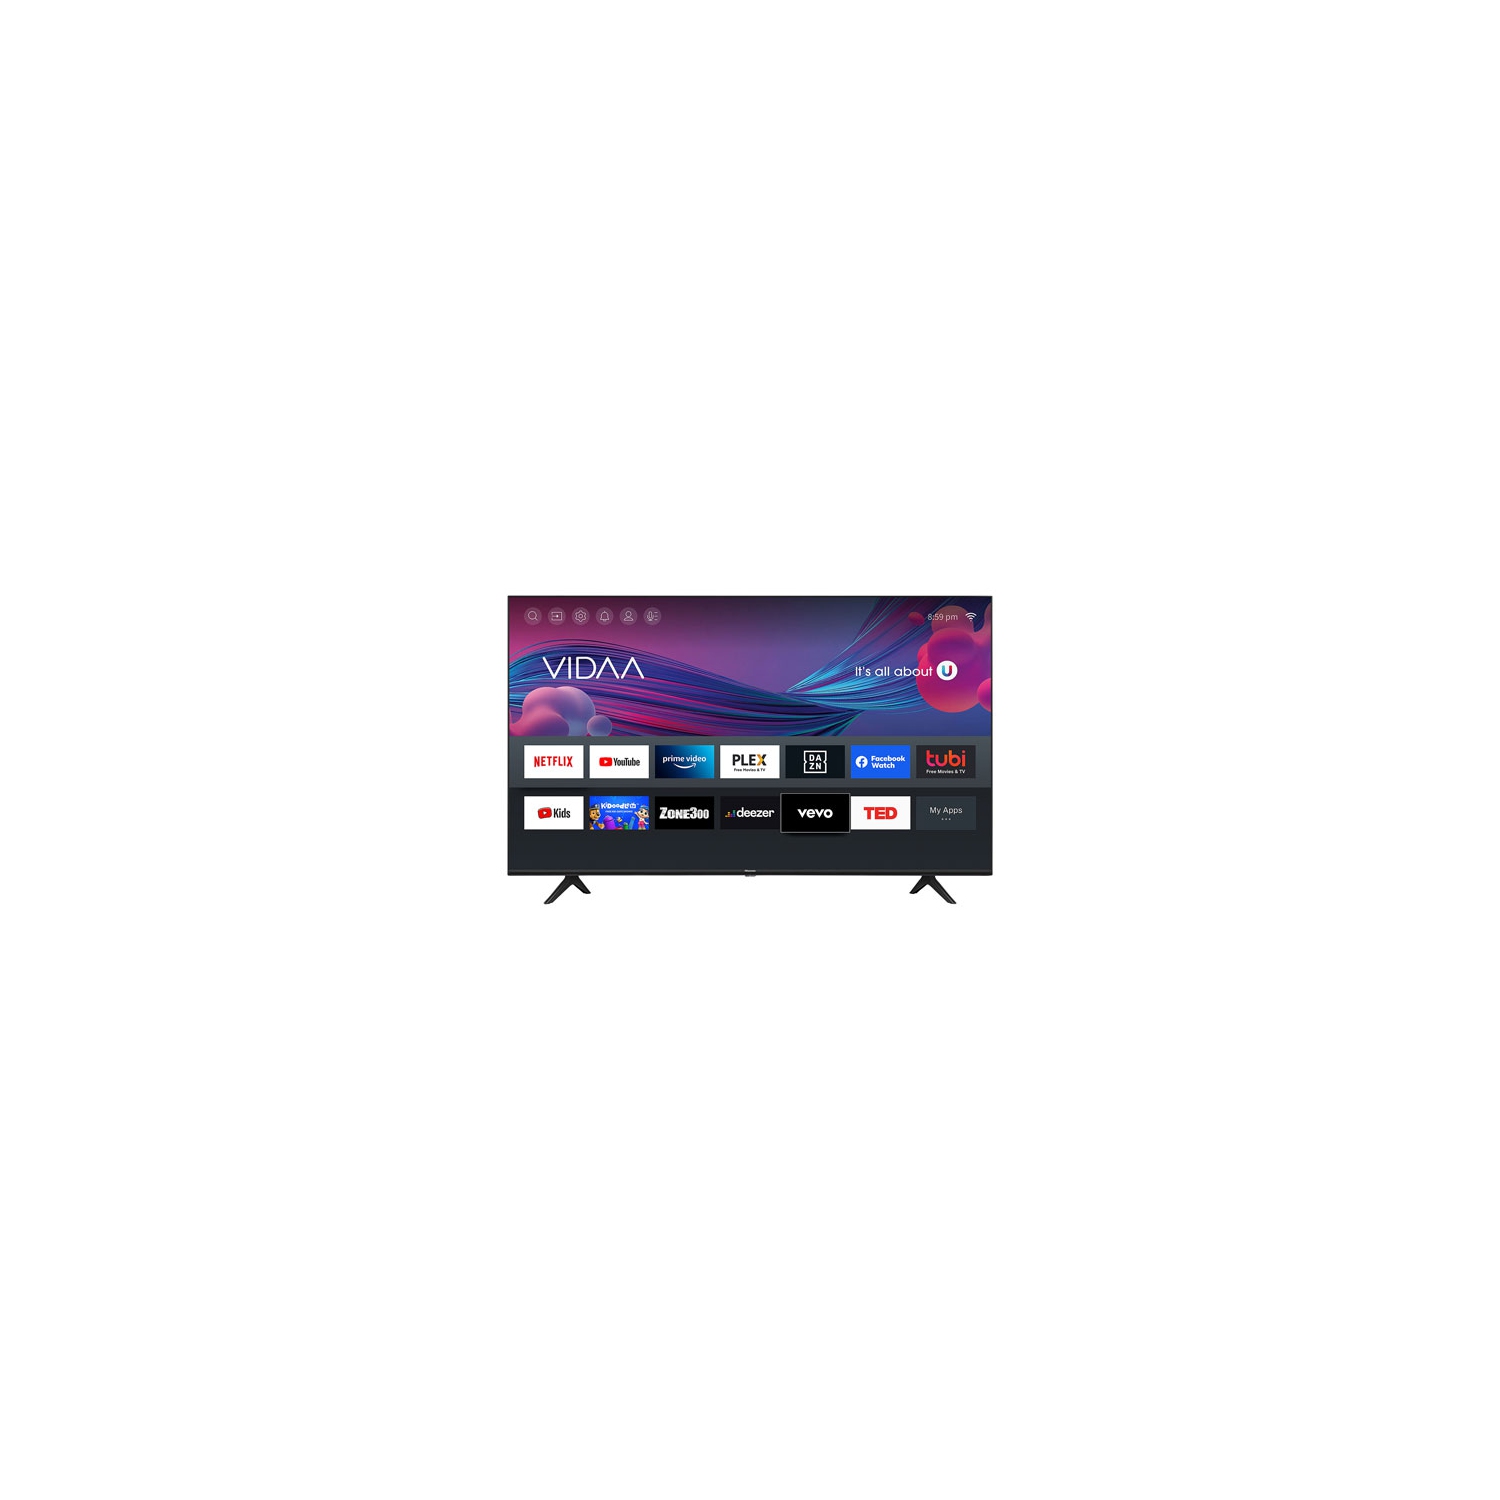 Refurbished (Excellent) -Hisense 40" 1080p HD LCD Vidaa Smart TV (40H55G) -2021